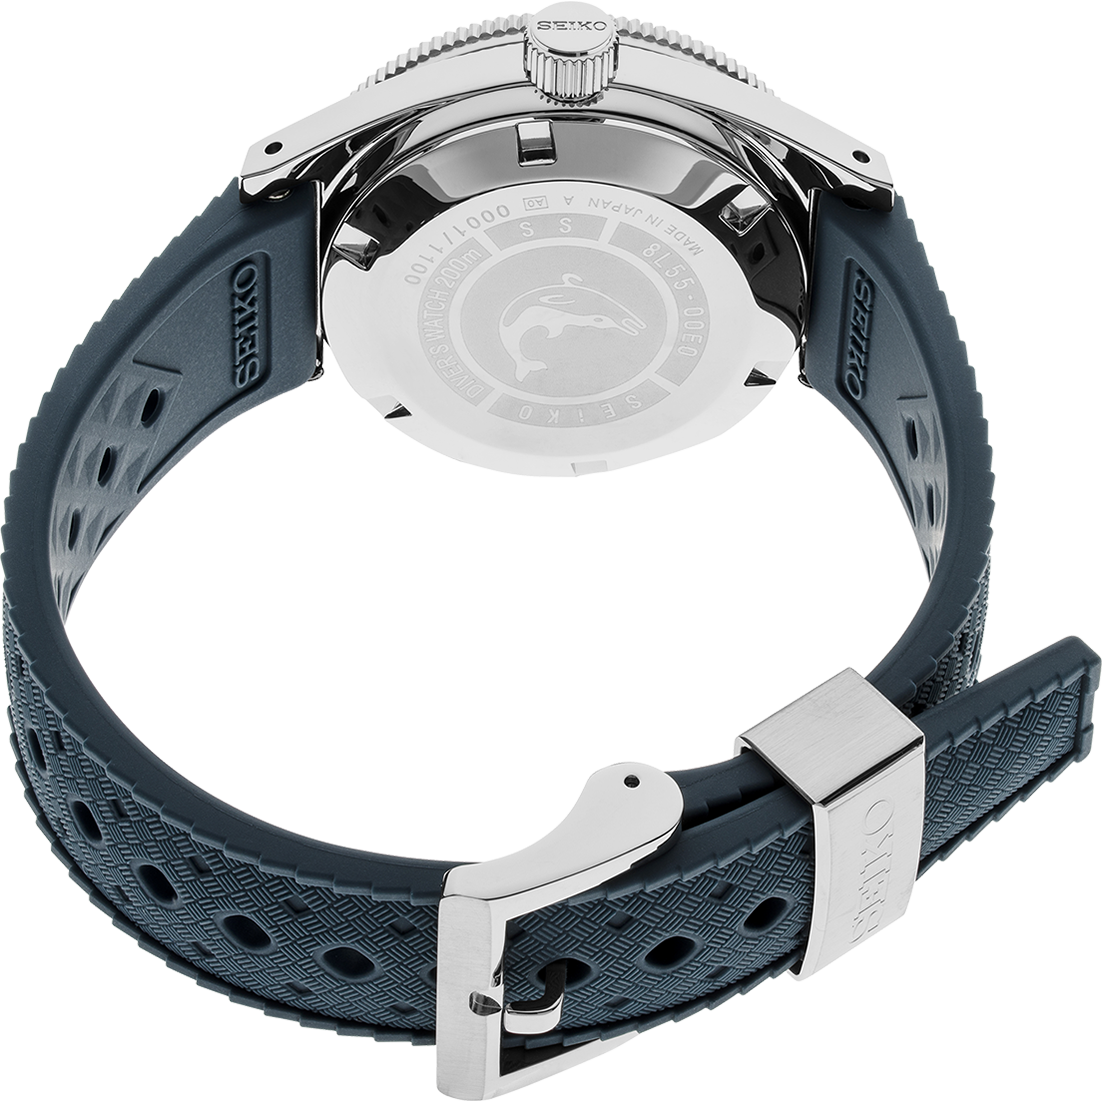 SLA037J1 | Seiko Watch Corporation